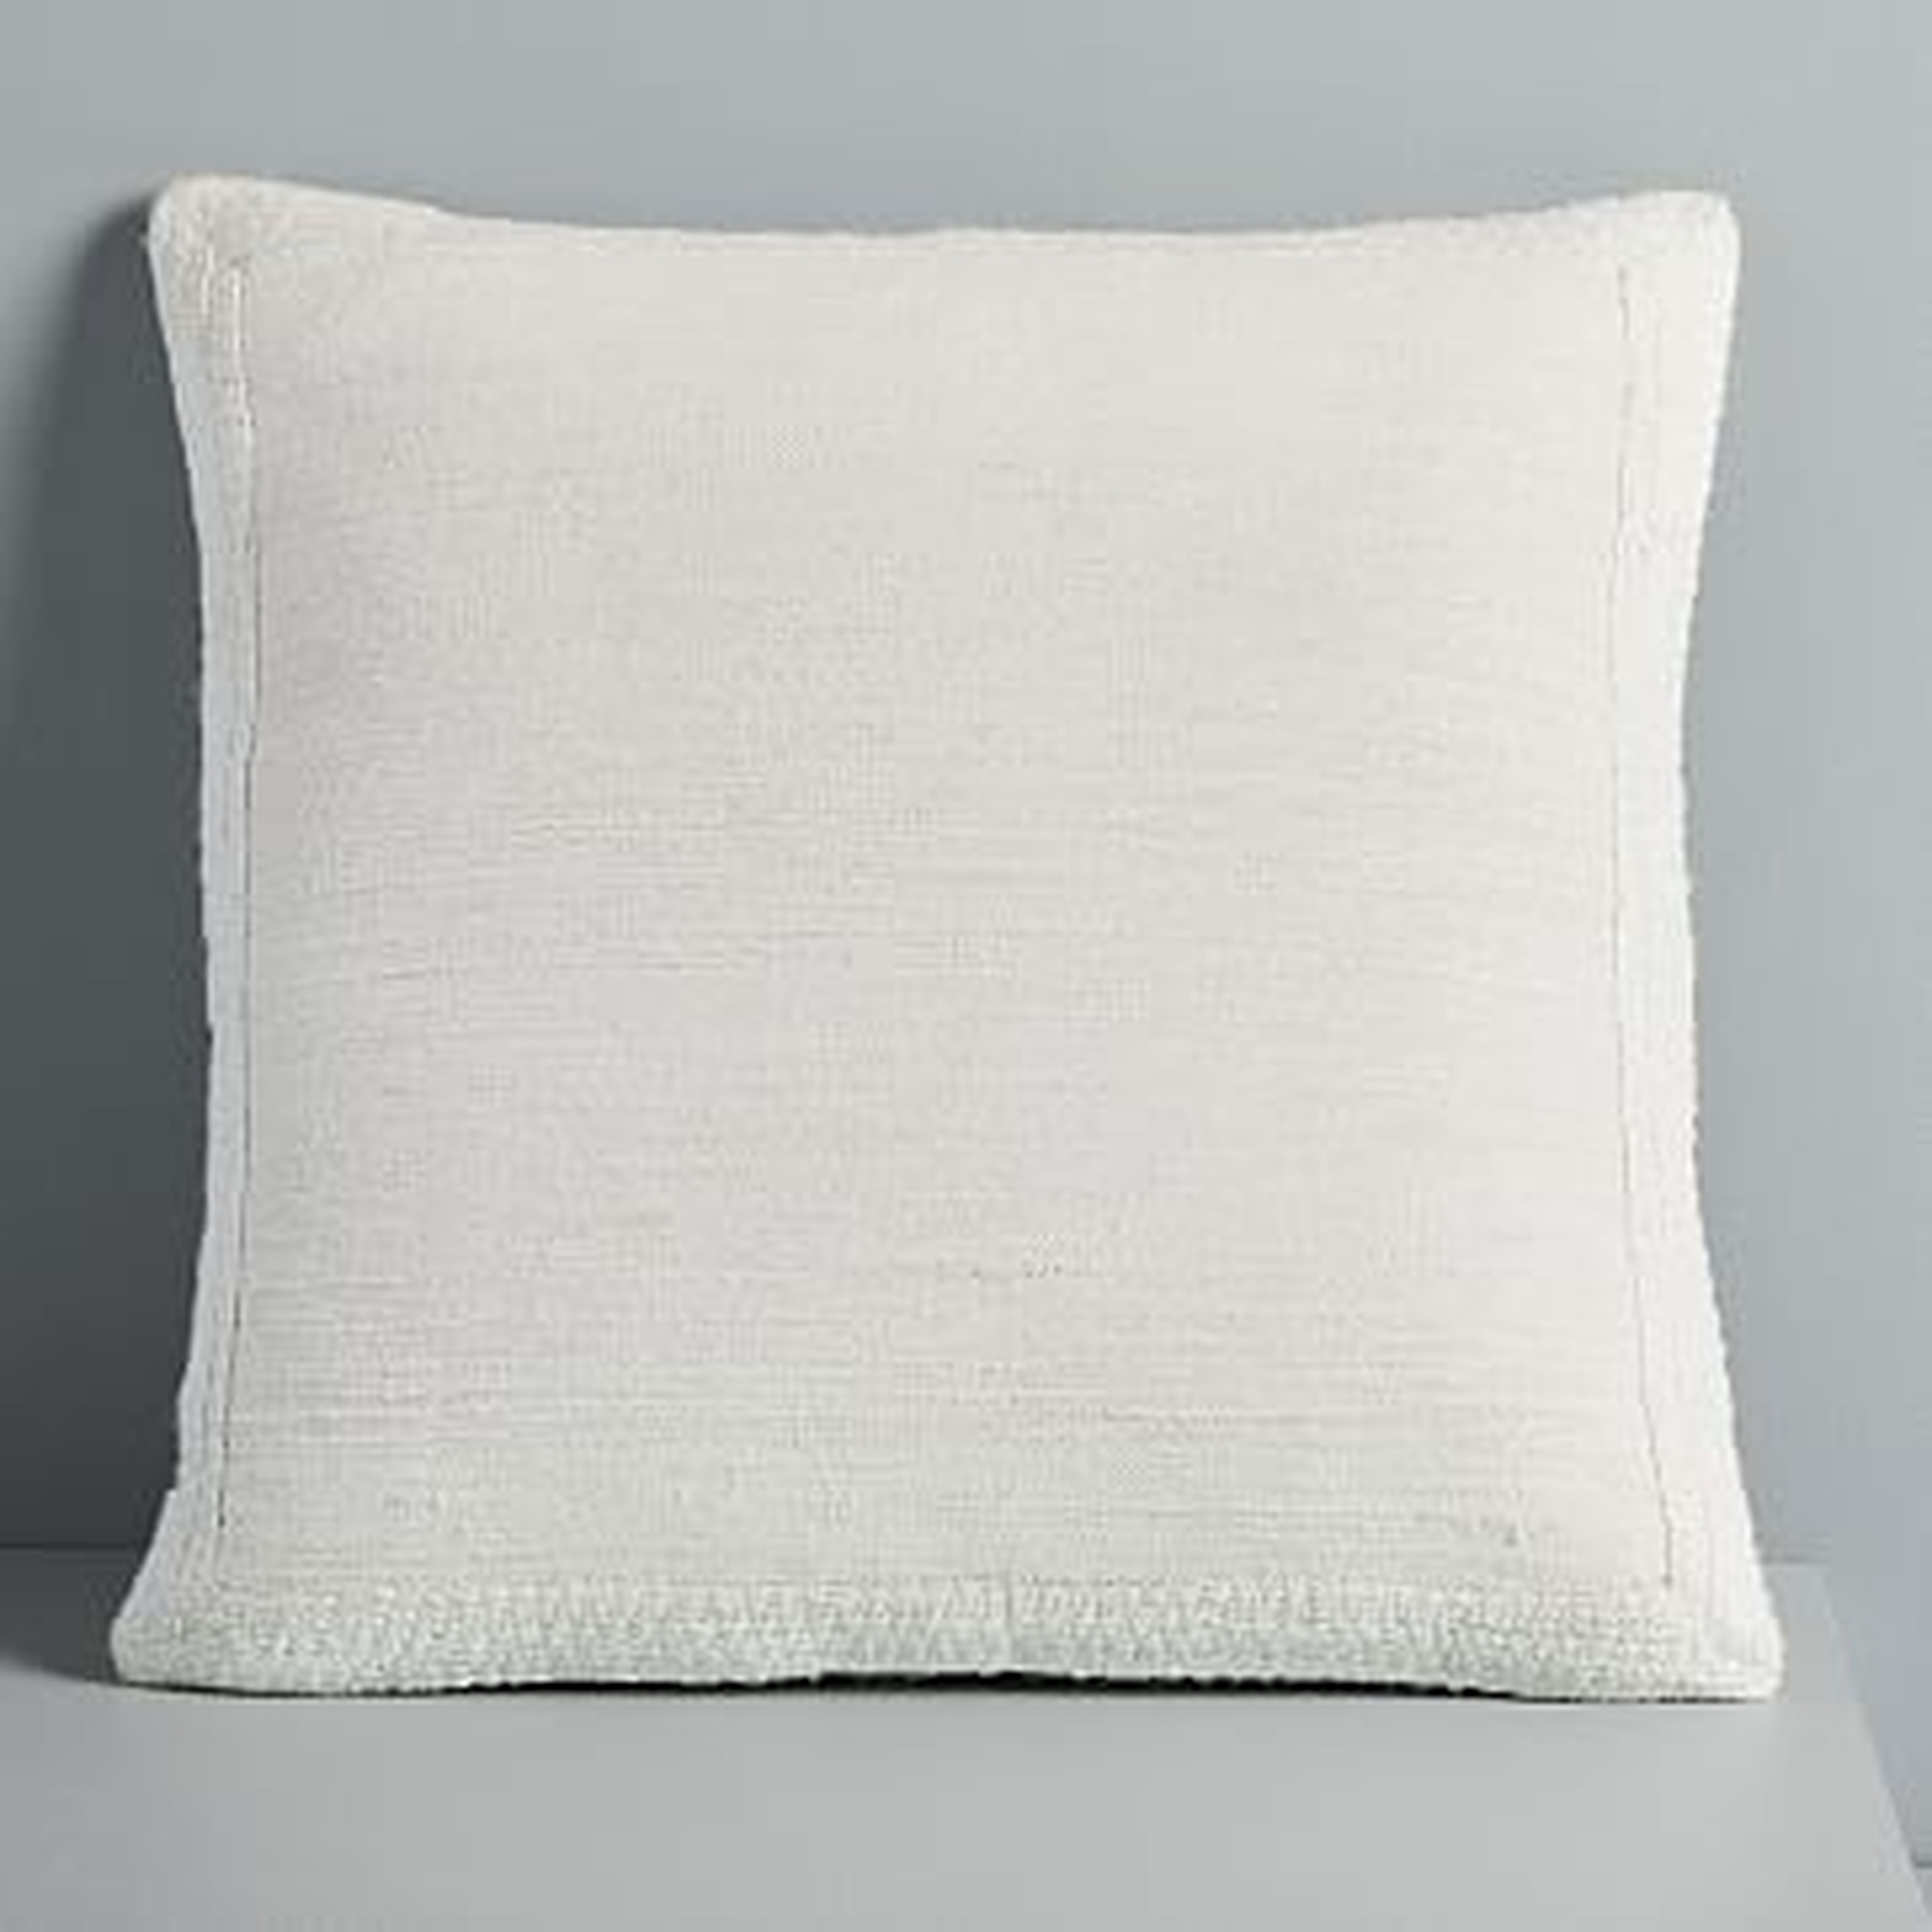 Textured Border Pillow Cover, Stone White, 20"x20" - West Elm